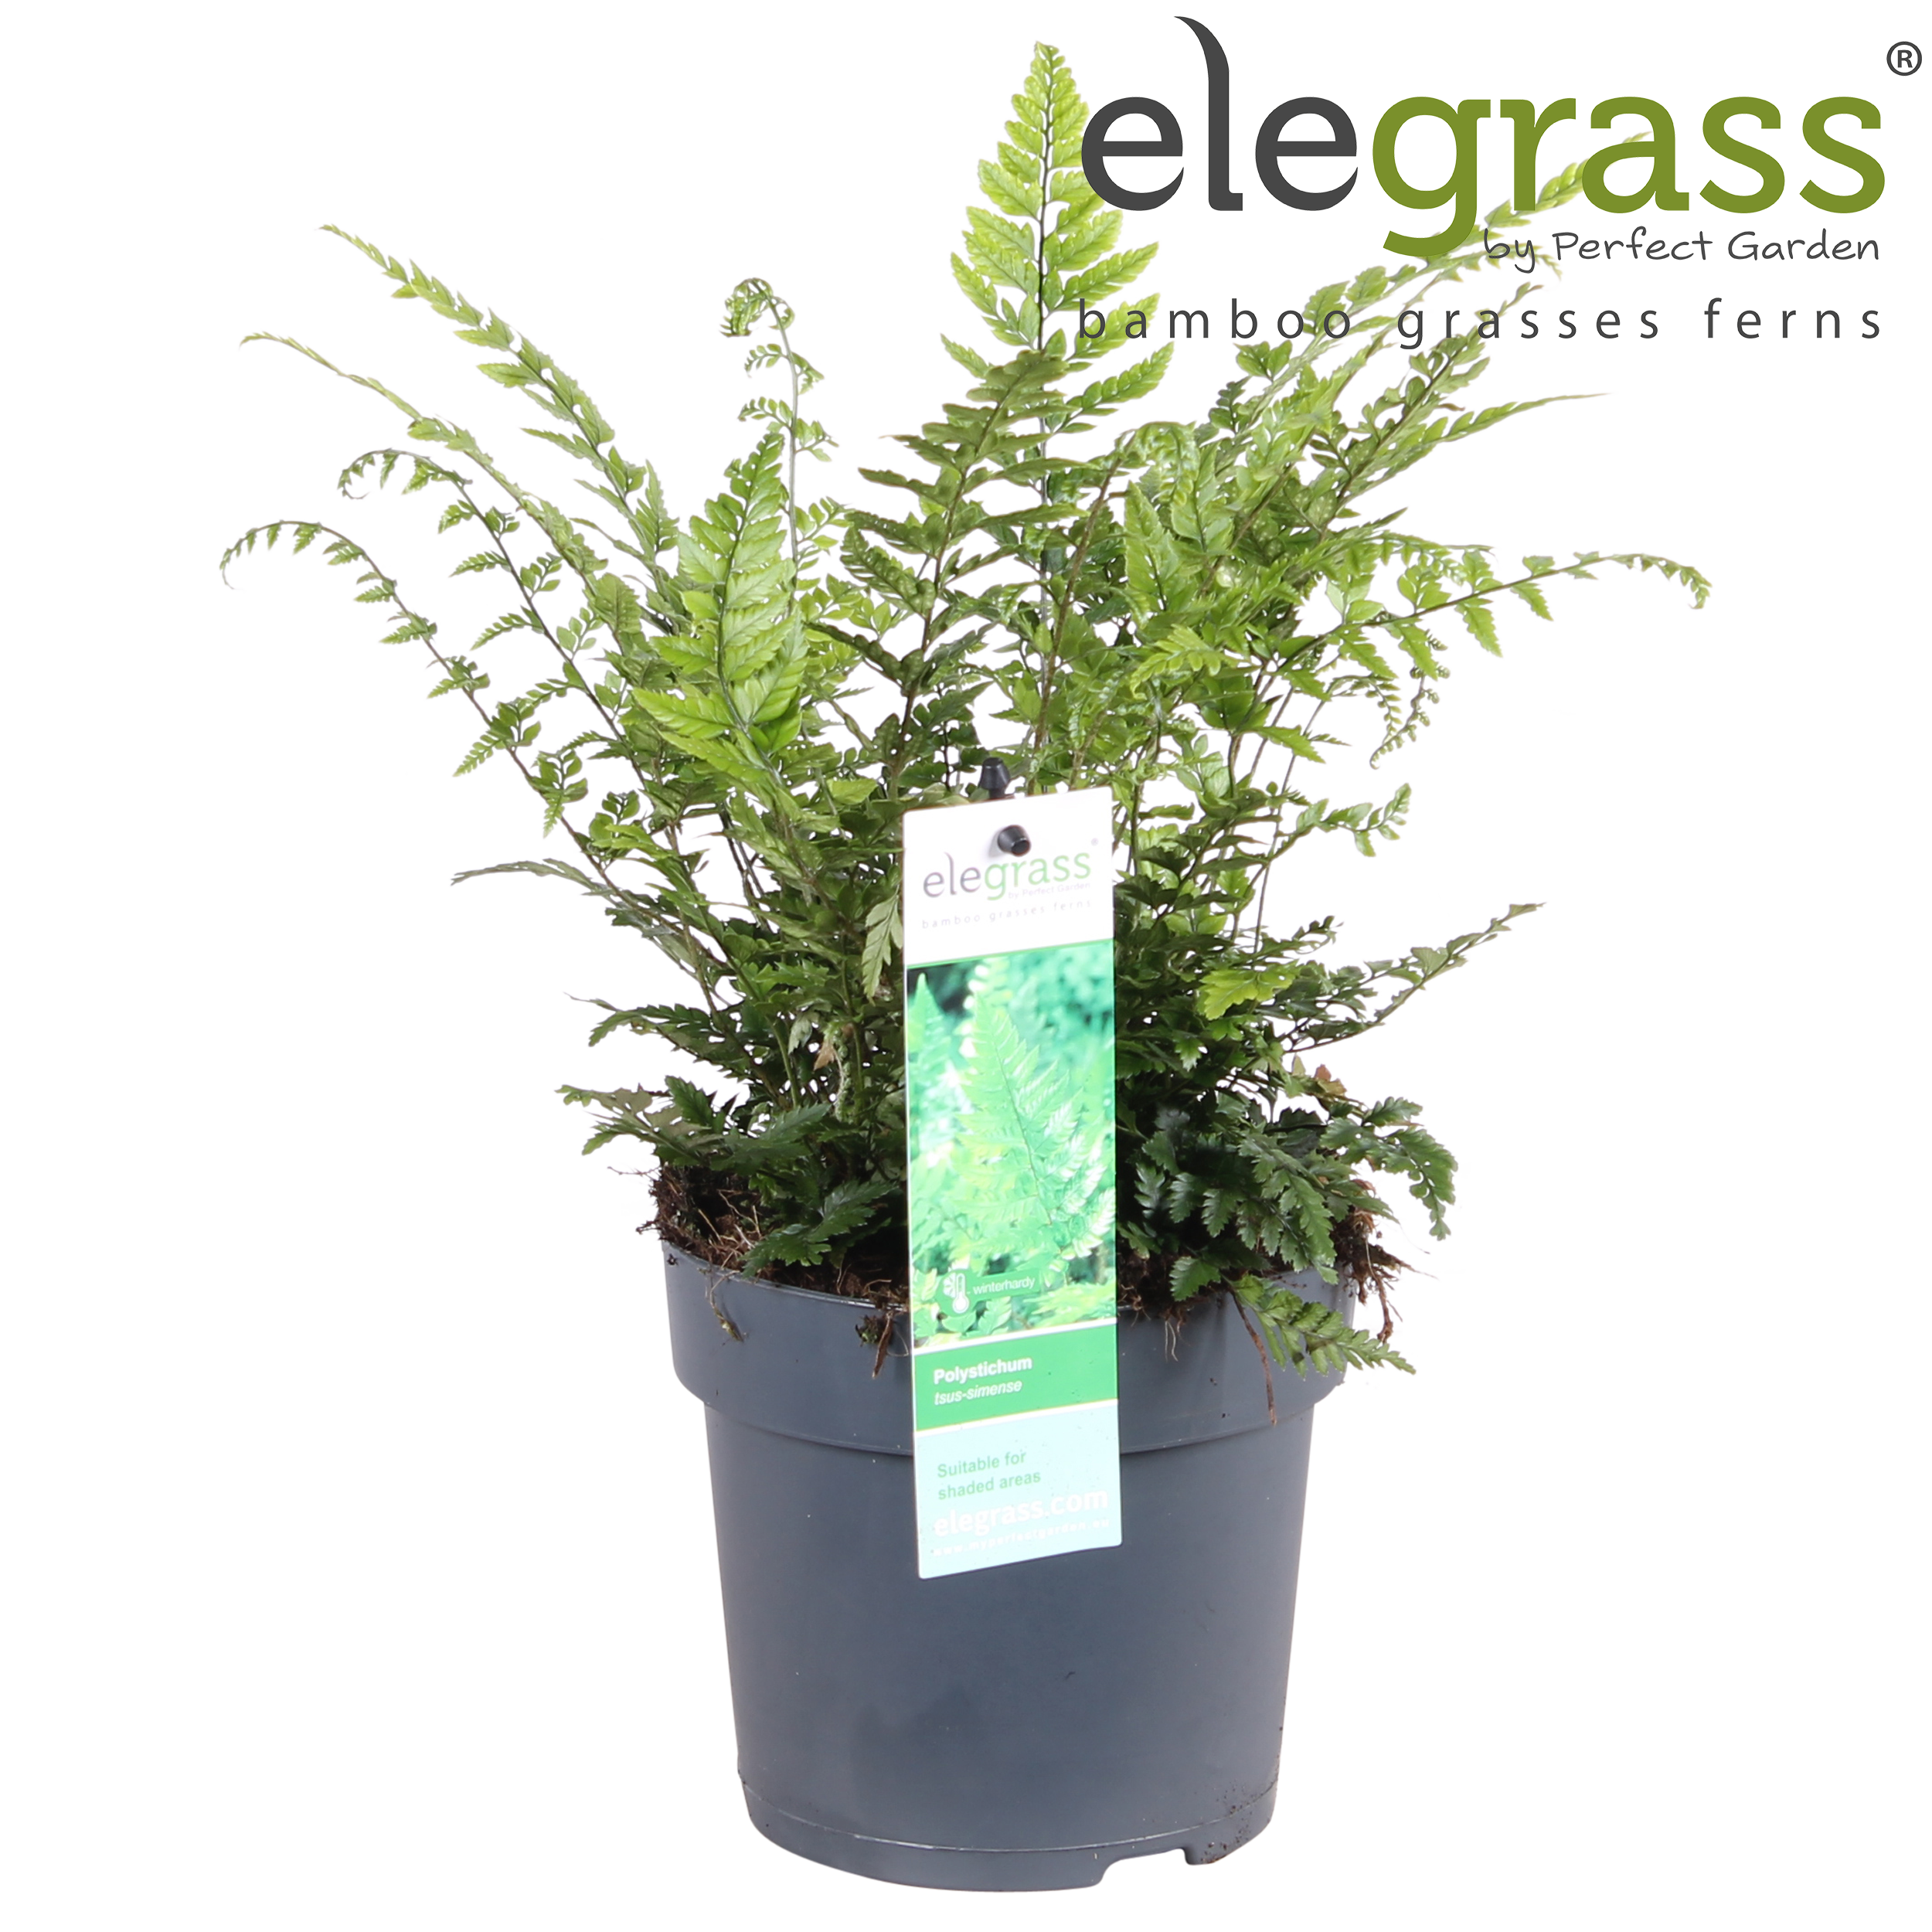 Ferns (Dryopteris & Phollystichum) - My Perfect Garden